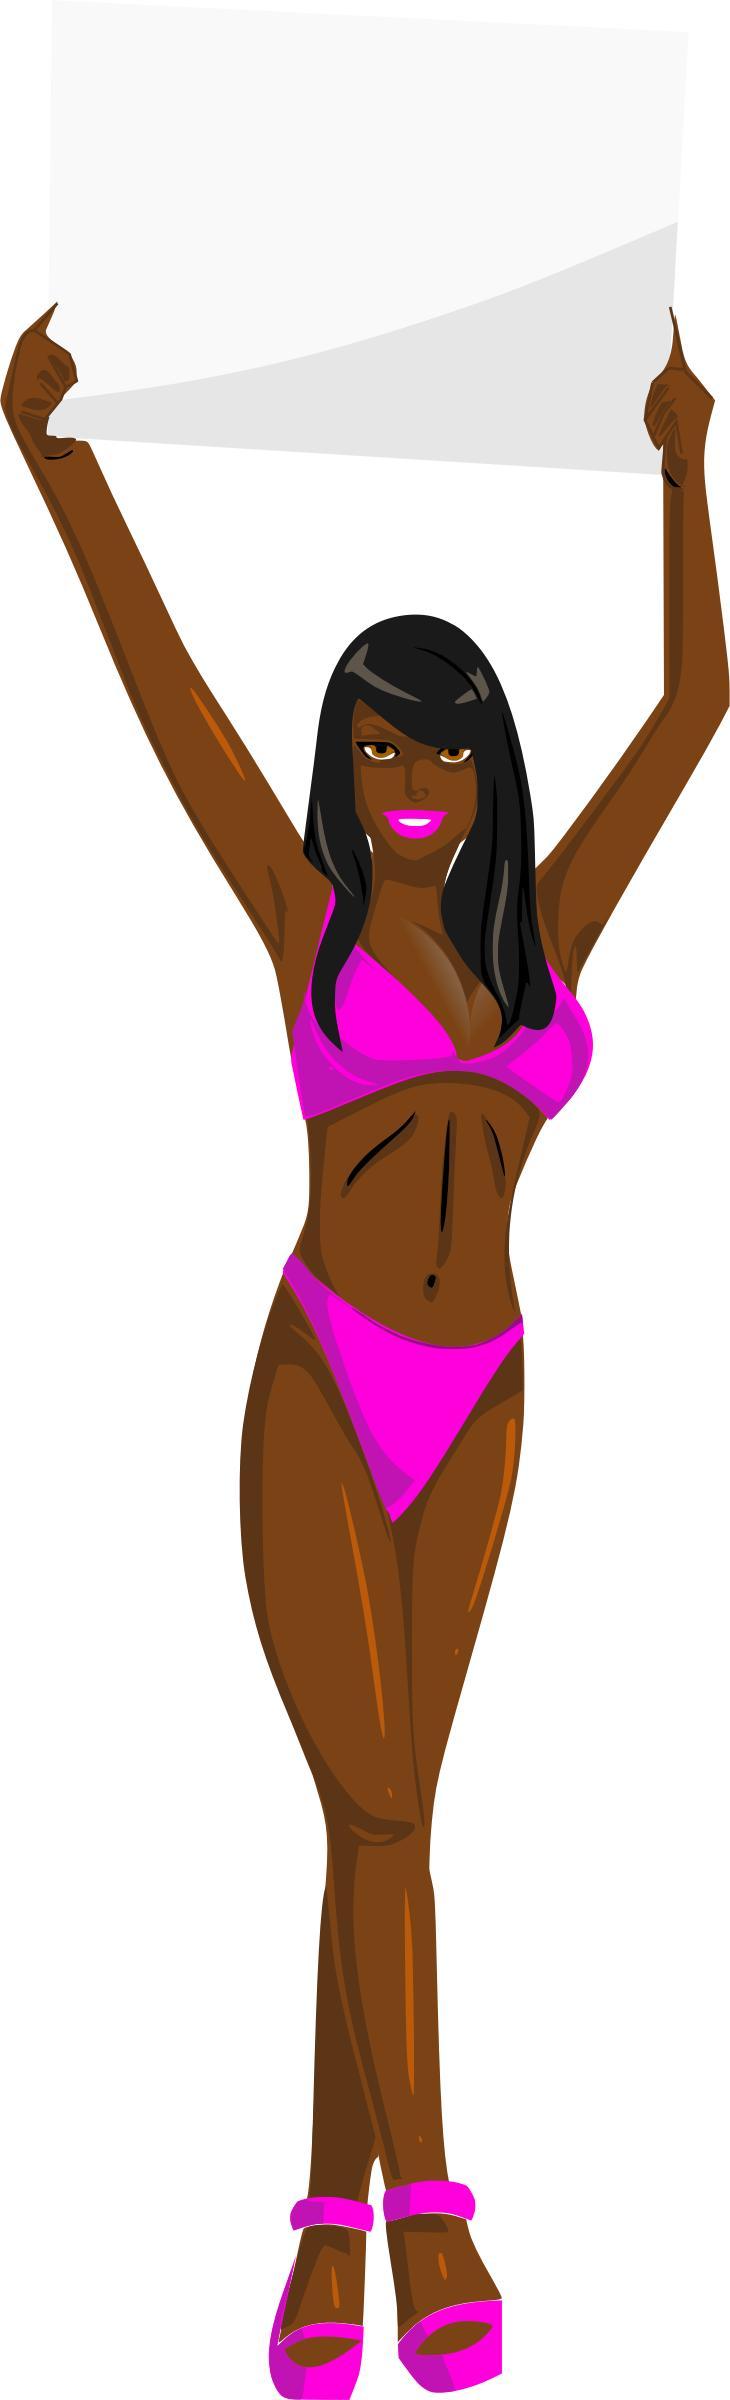 Girl with sign (pink bikini, black hair, dark skin) png transparent